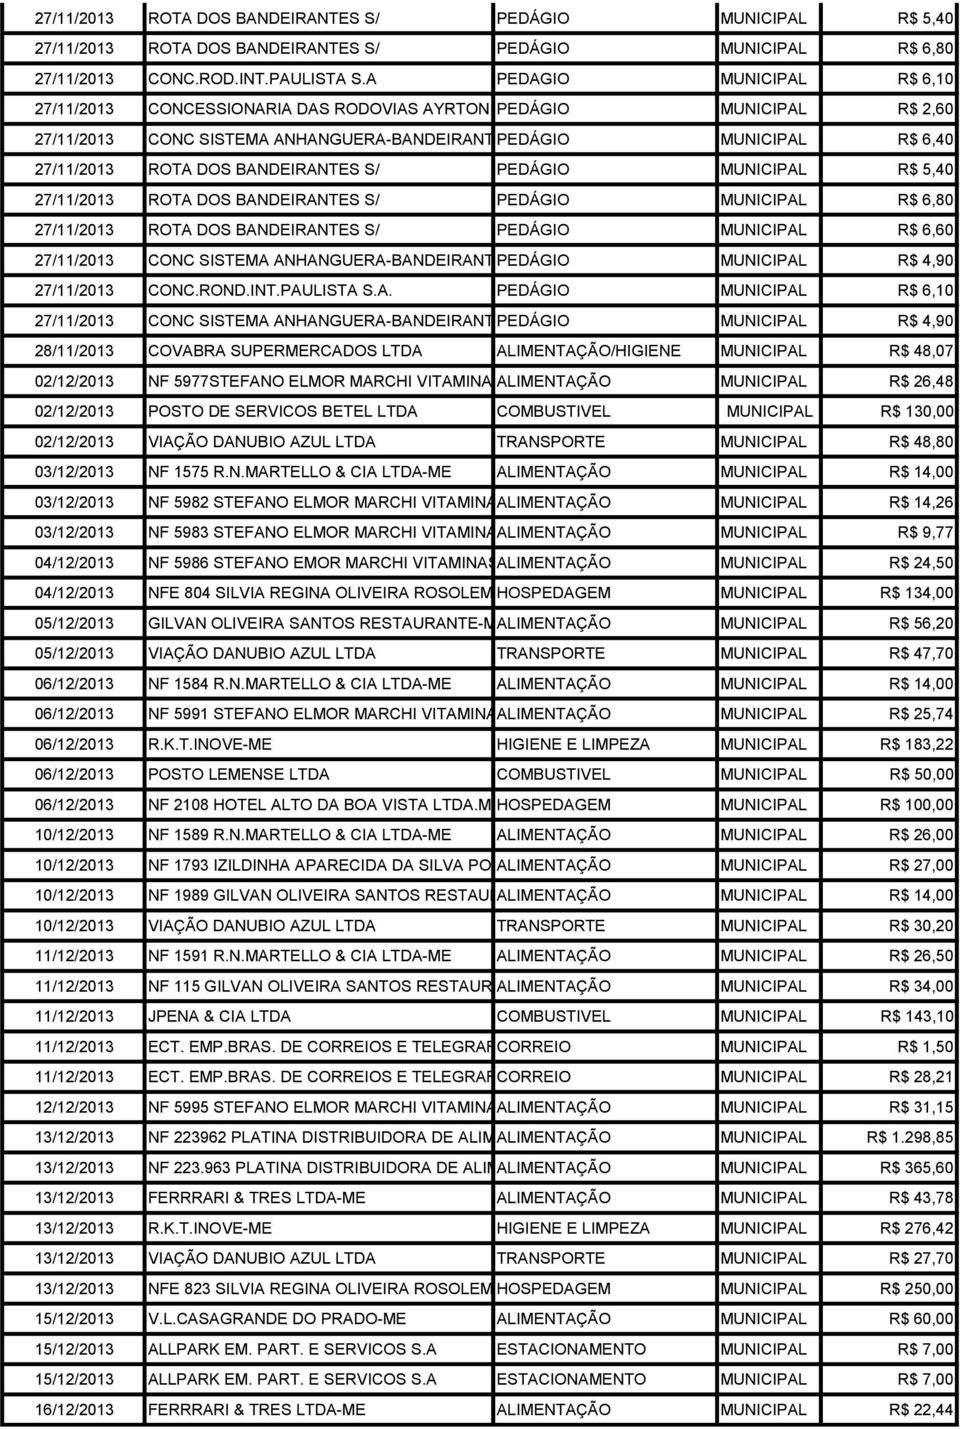 A MUNICIPAL R$ 2,60 27/11/2013 CONC SISTEMA ANHANGUERA-BANDEIRANTES PEDÁGIO S/A MUNICIPAL R$ 6,40 27/11/2013 ROTA DOS BANDEIRANTES S/ PEDÁGIO MUNICIPAL R$ 5,40 27/11/2013 ROTA DOS BANDEIRANTES S/